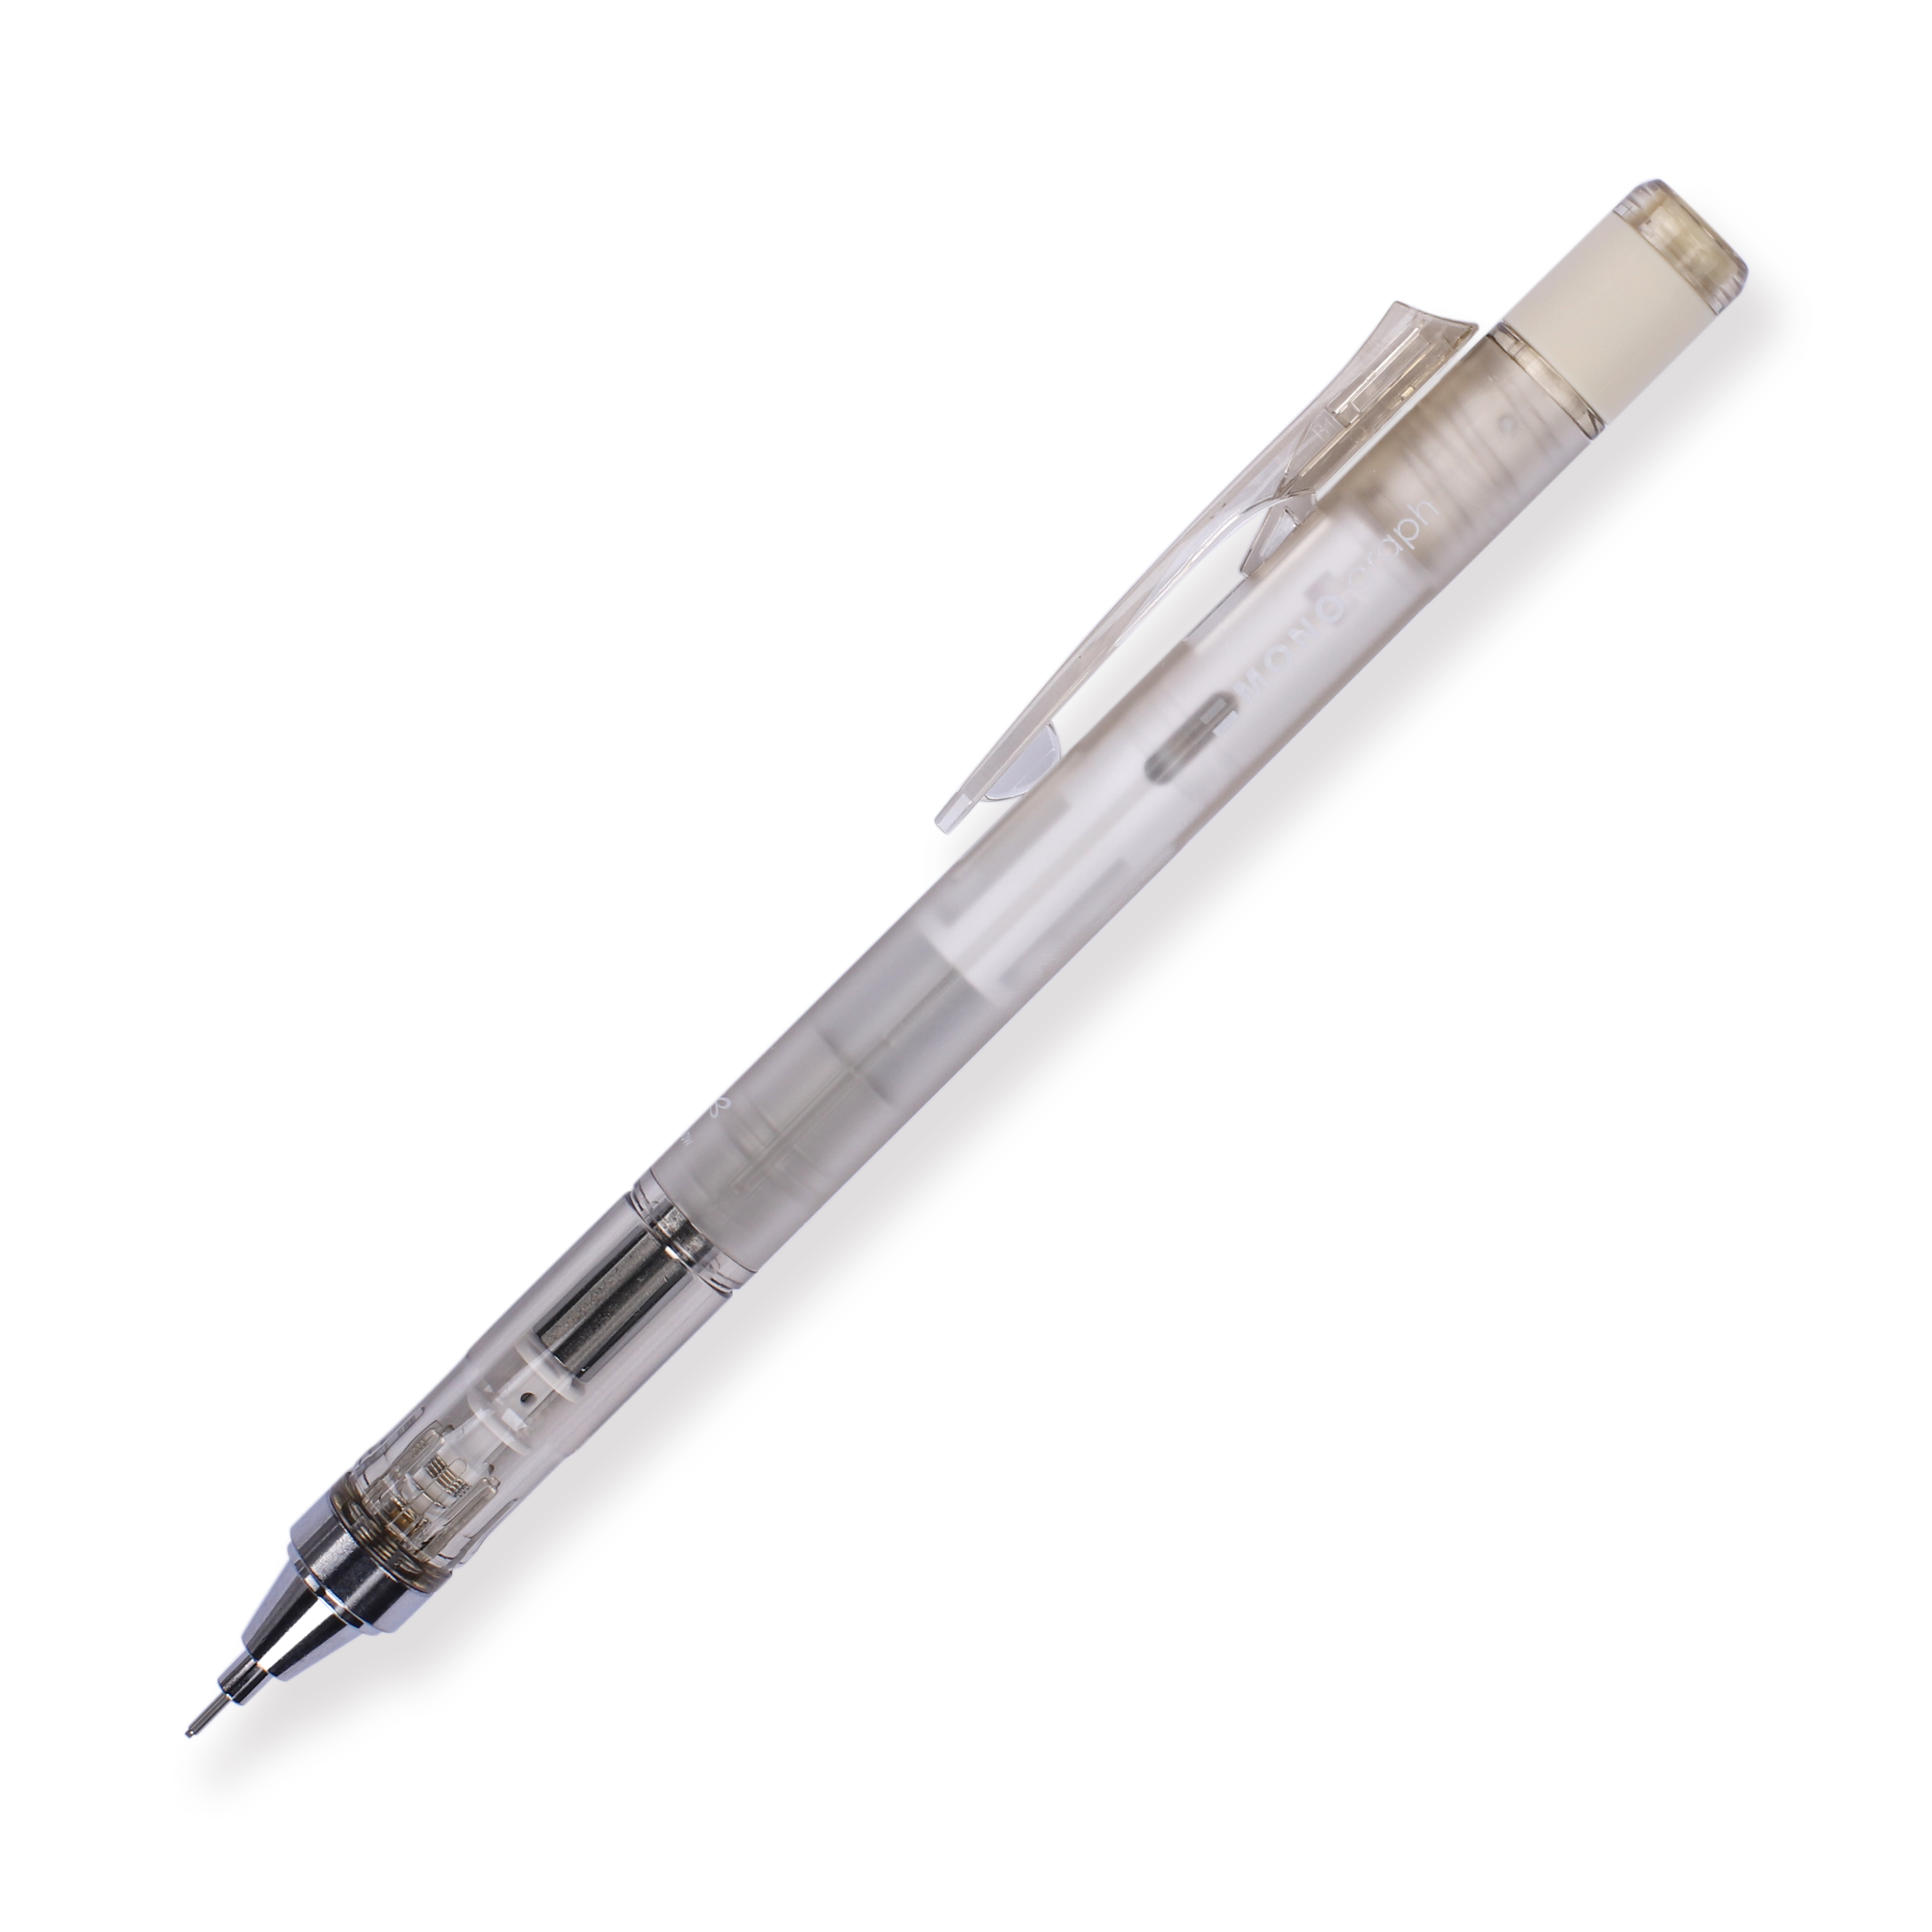 Tombow MONO Graph Dusty Color Mechanical Pencil Set - 0.5mm - Latte Beige - Stationery Pal